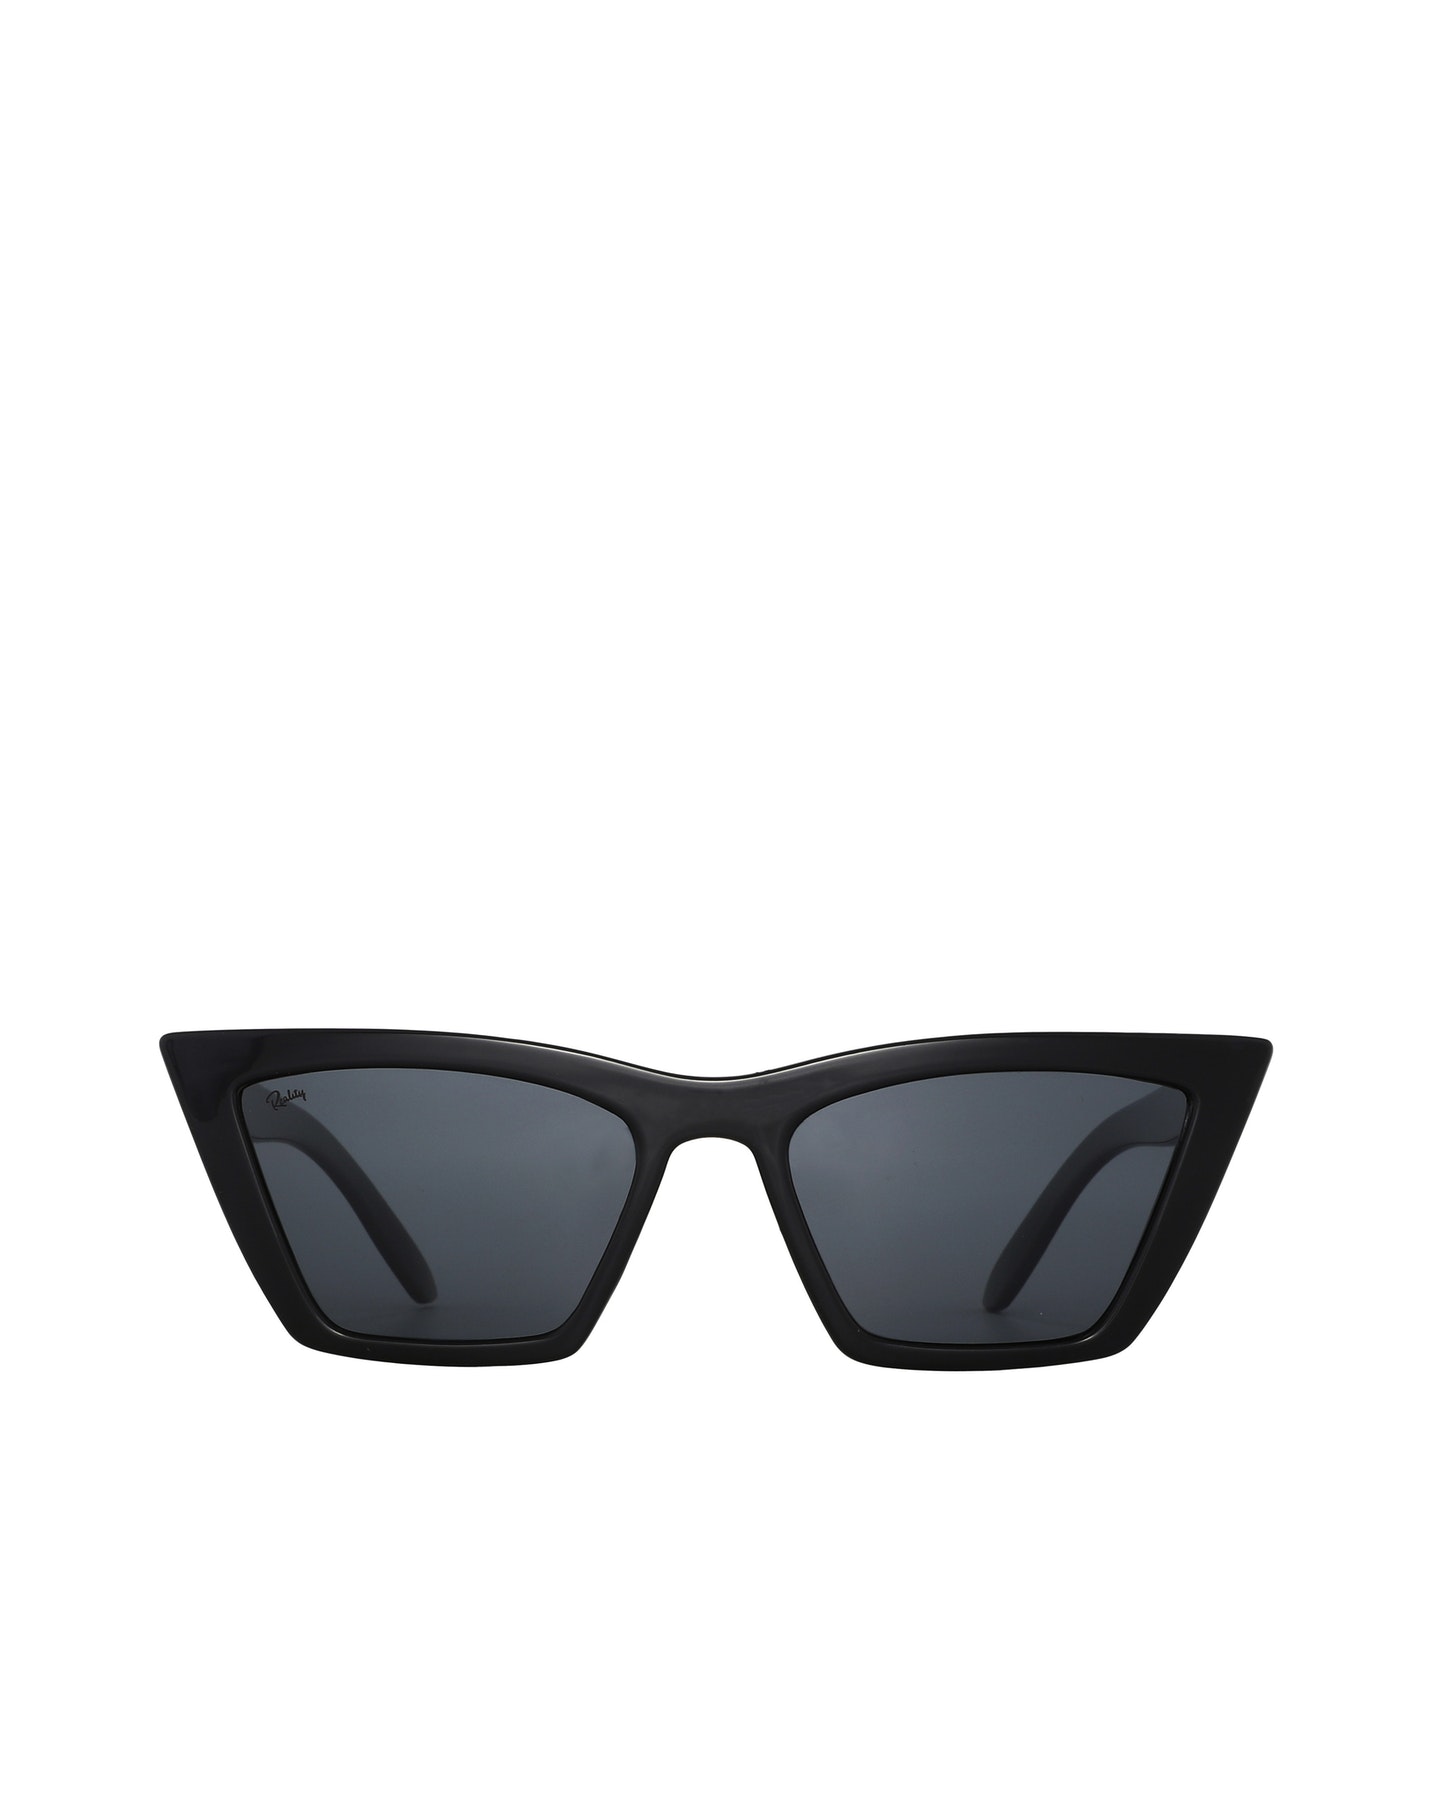 Reality Eyewear Lizette Sunglasses - Black | SurfStitch